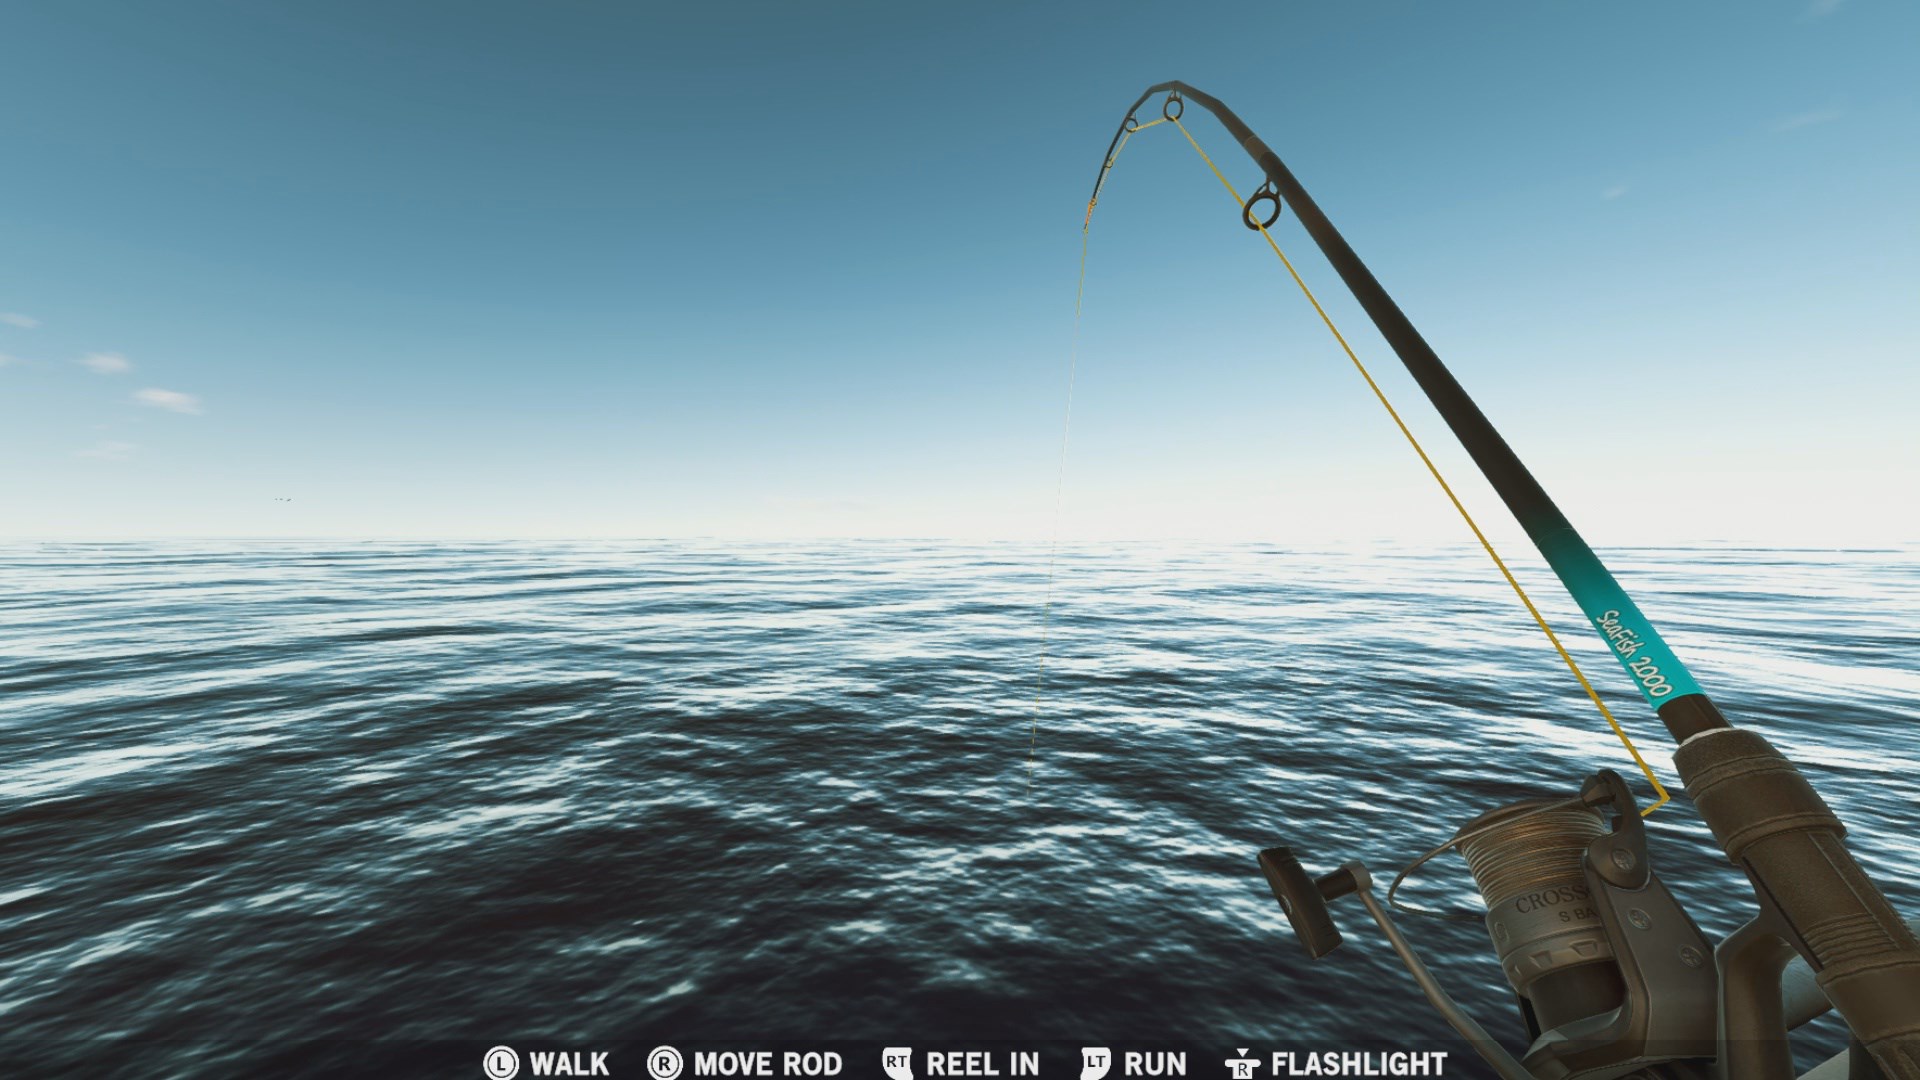 Xbox Fishing Games